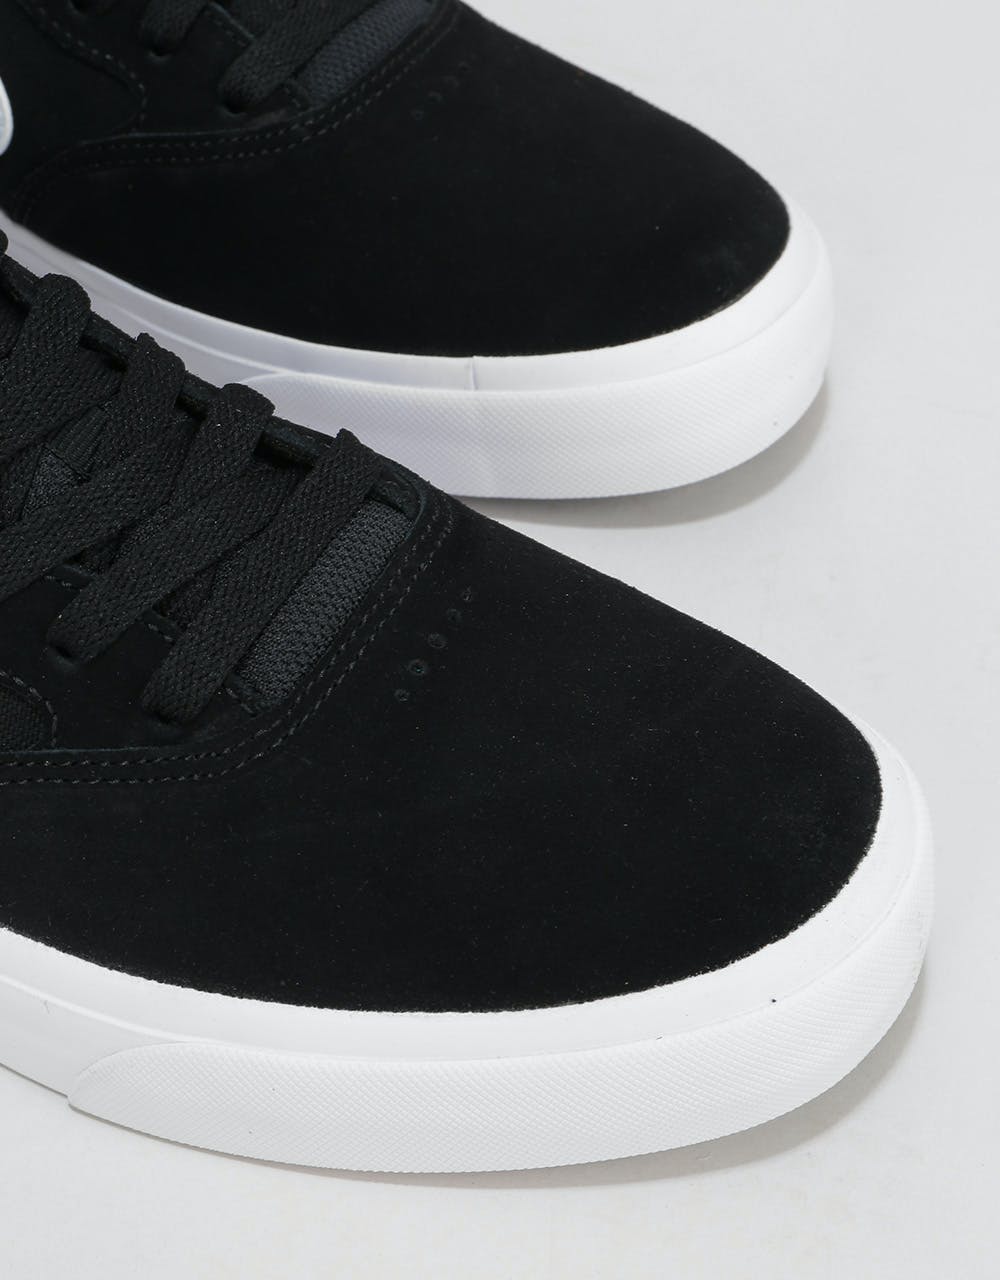 Nike SB Chron SLR Skate Shoes - Black/White